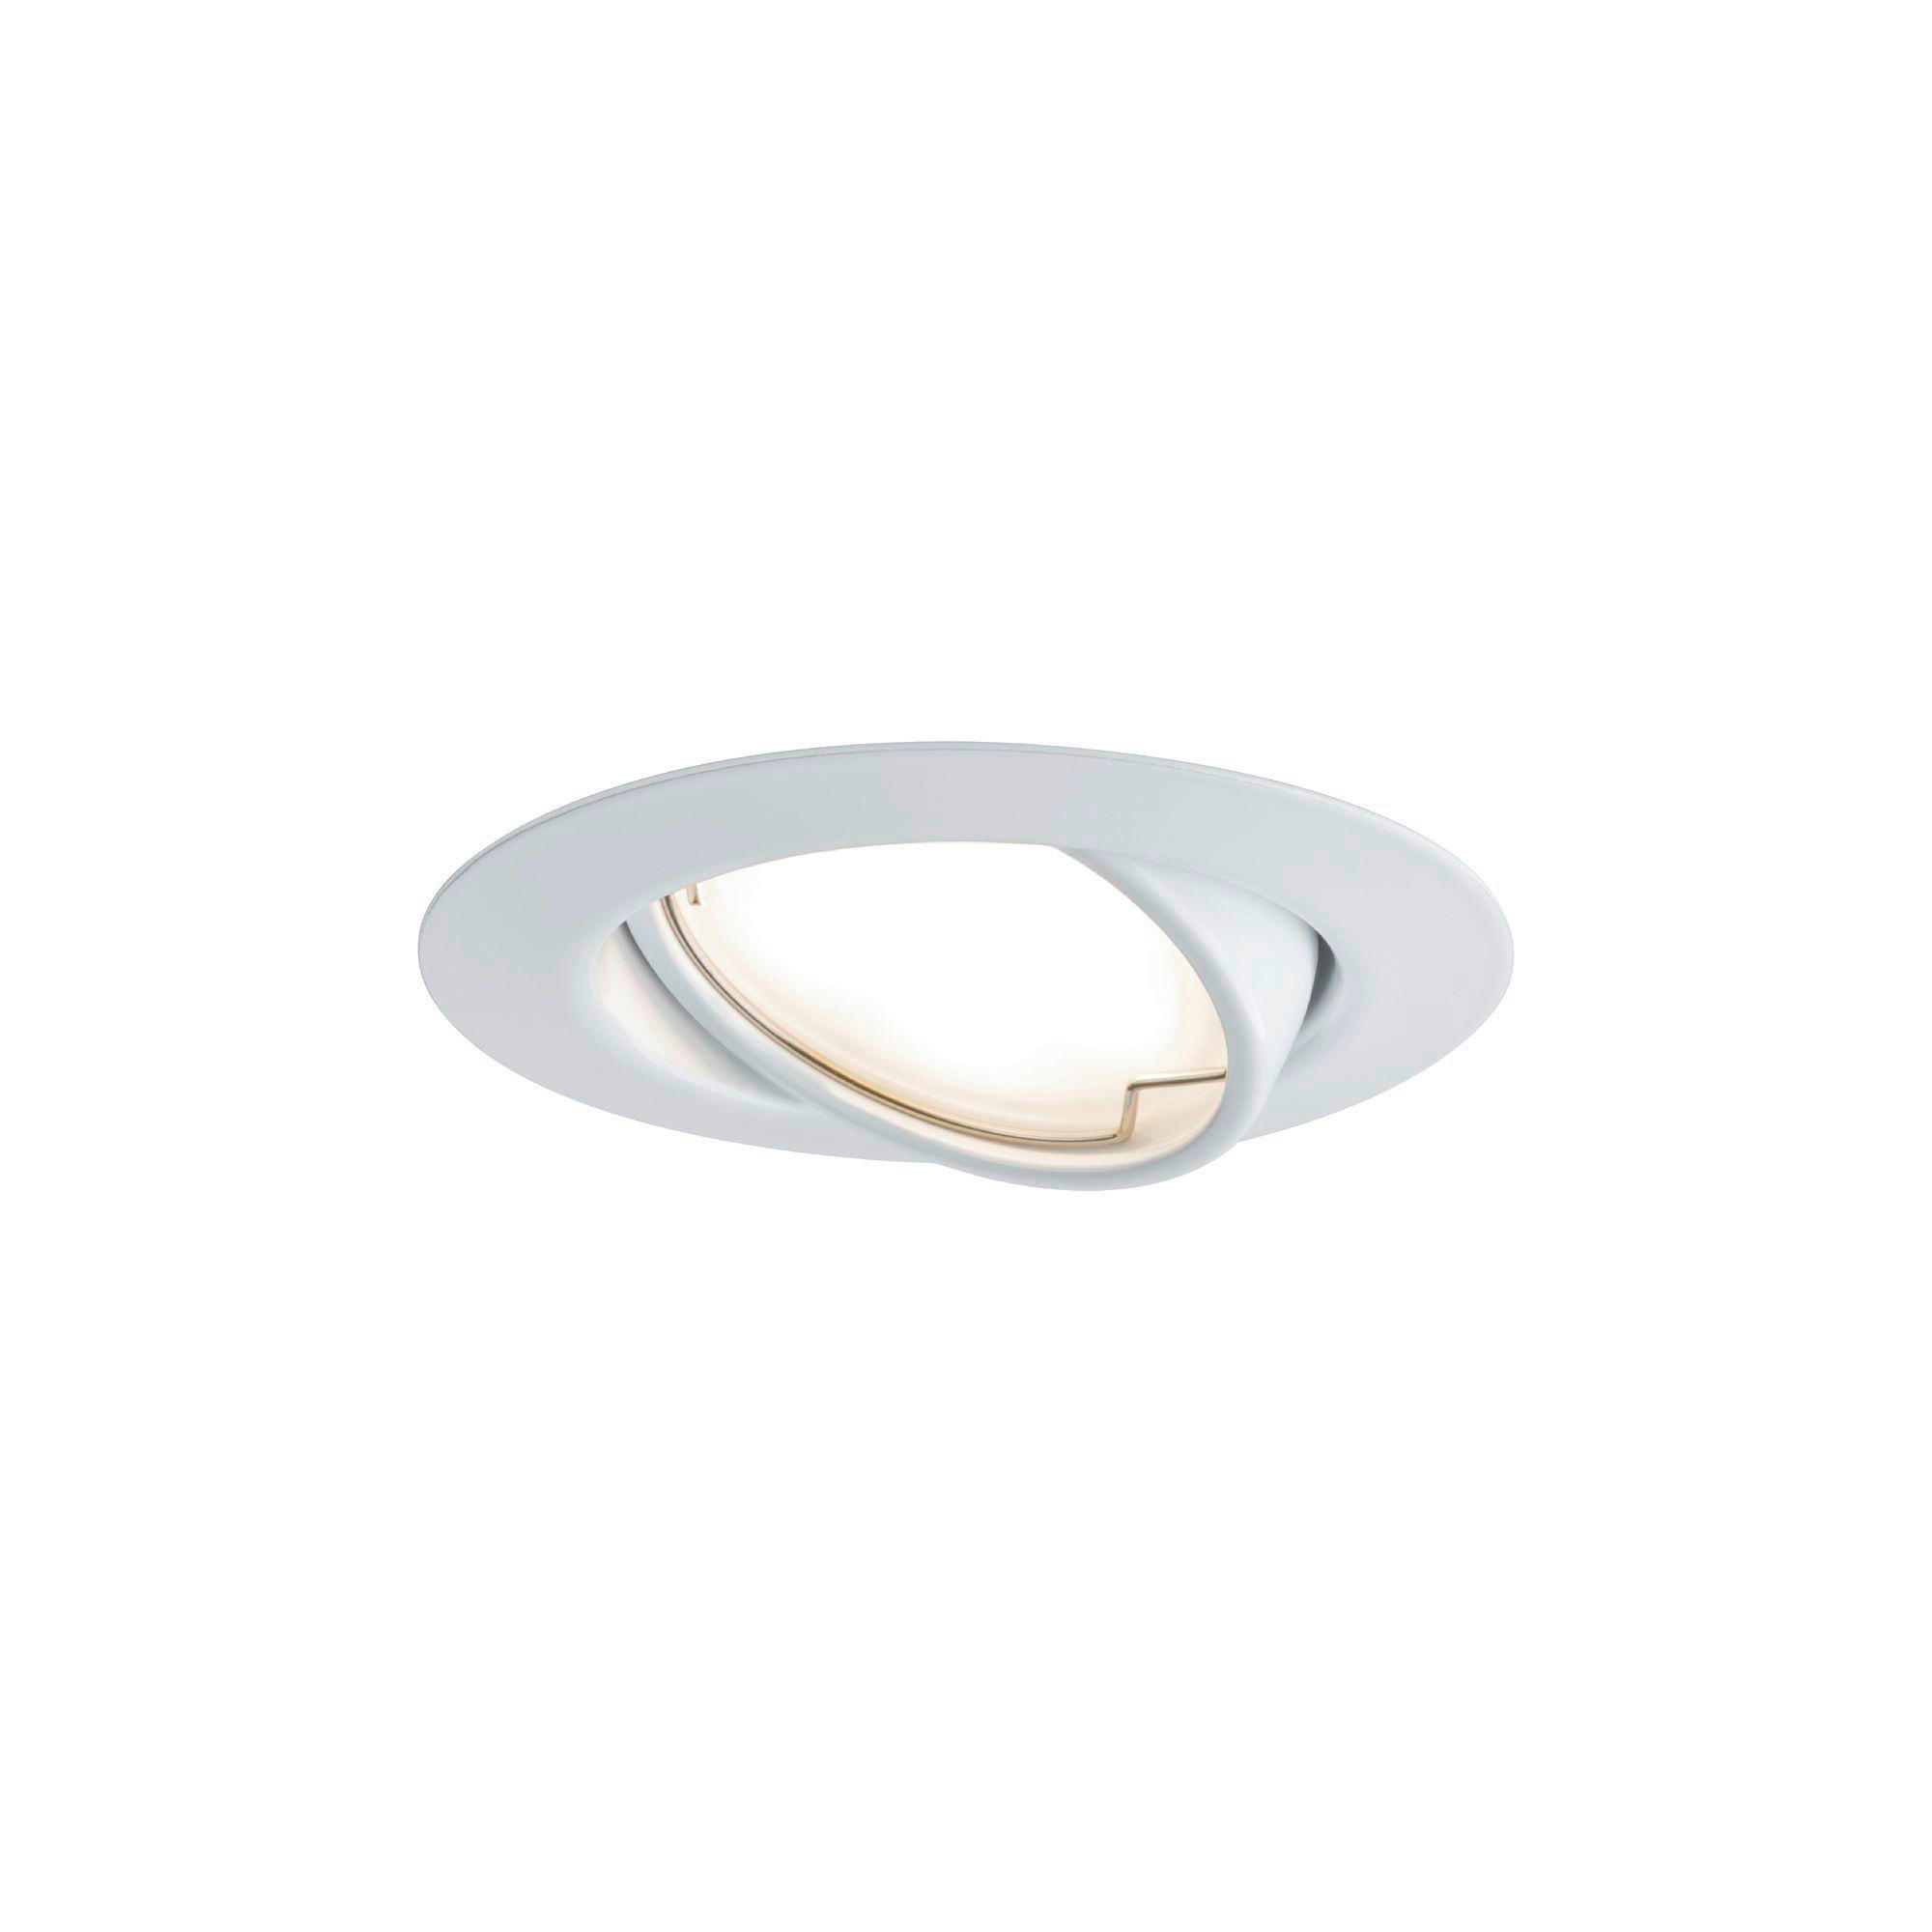 LED-SPOT  - Weiß, Design, Metall (9cm) - Paulmann